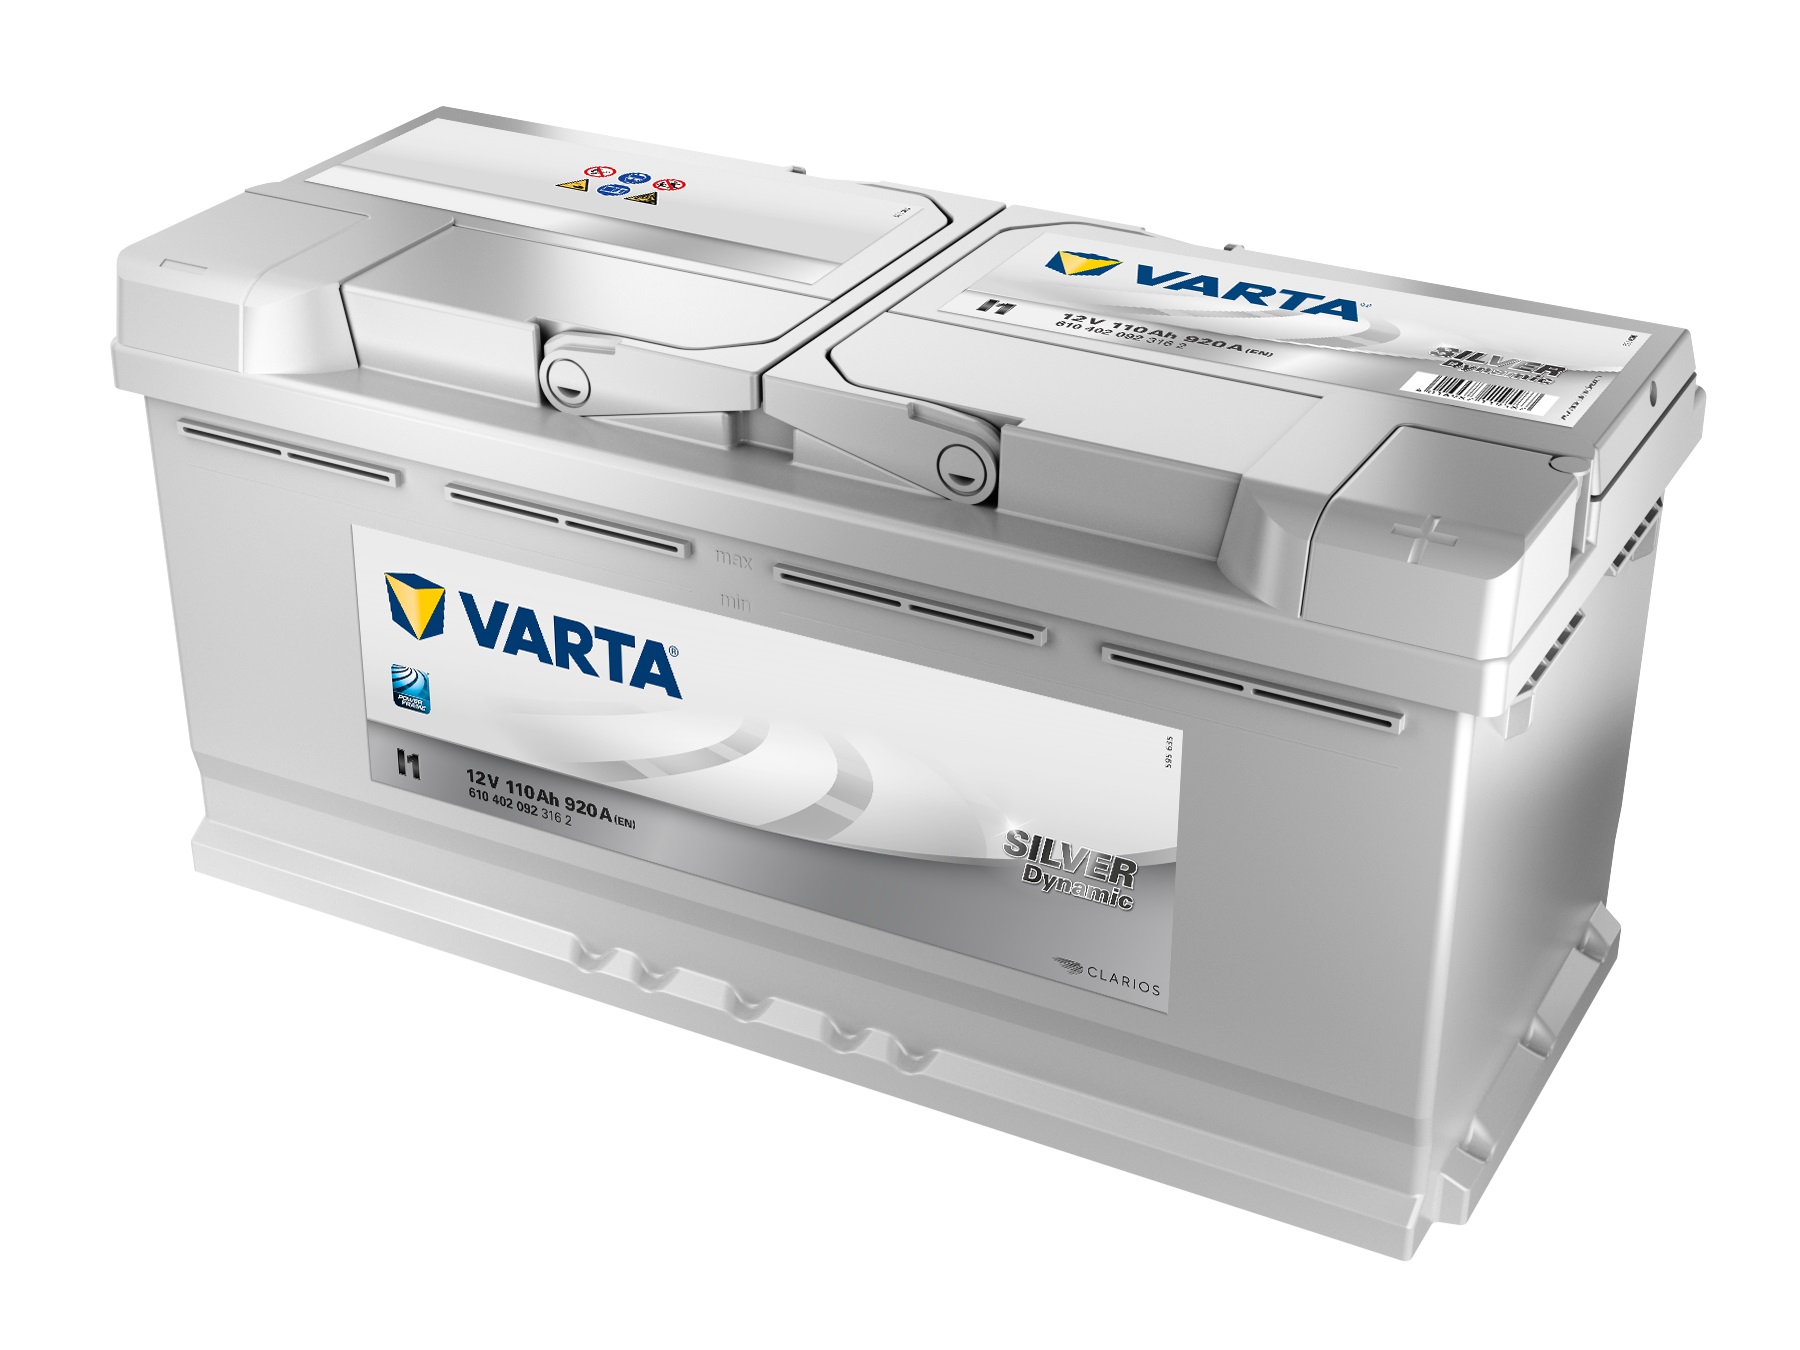 VARTA Silver Dynamic Autobatterie I1, 610 402 092, 110 Ah, 920 A von Varta